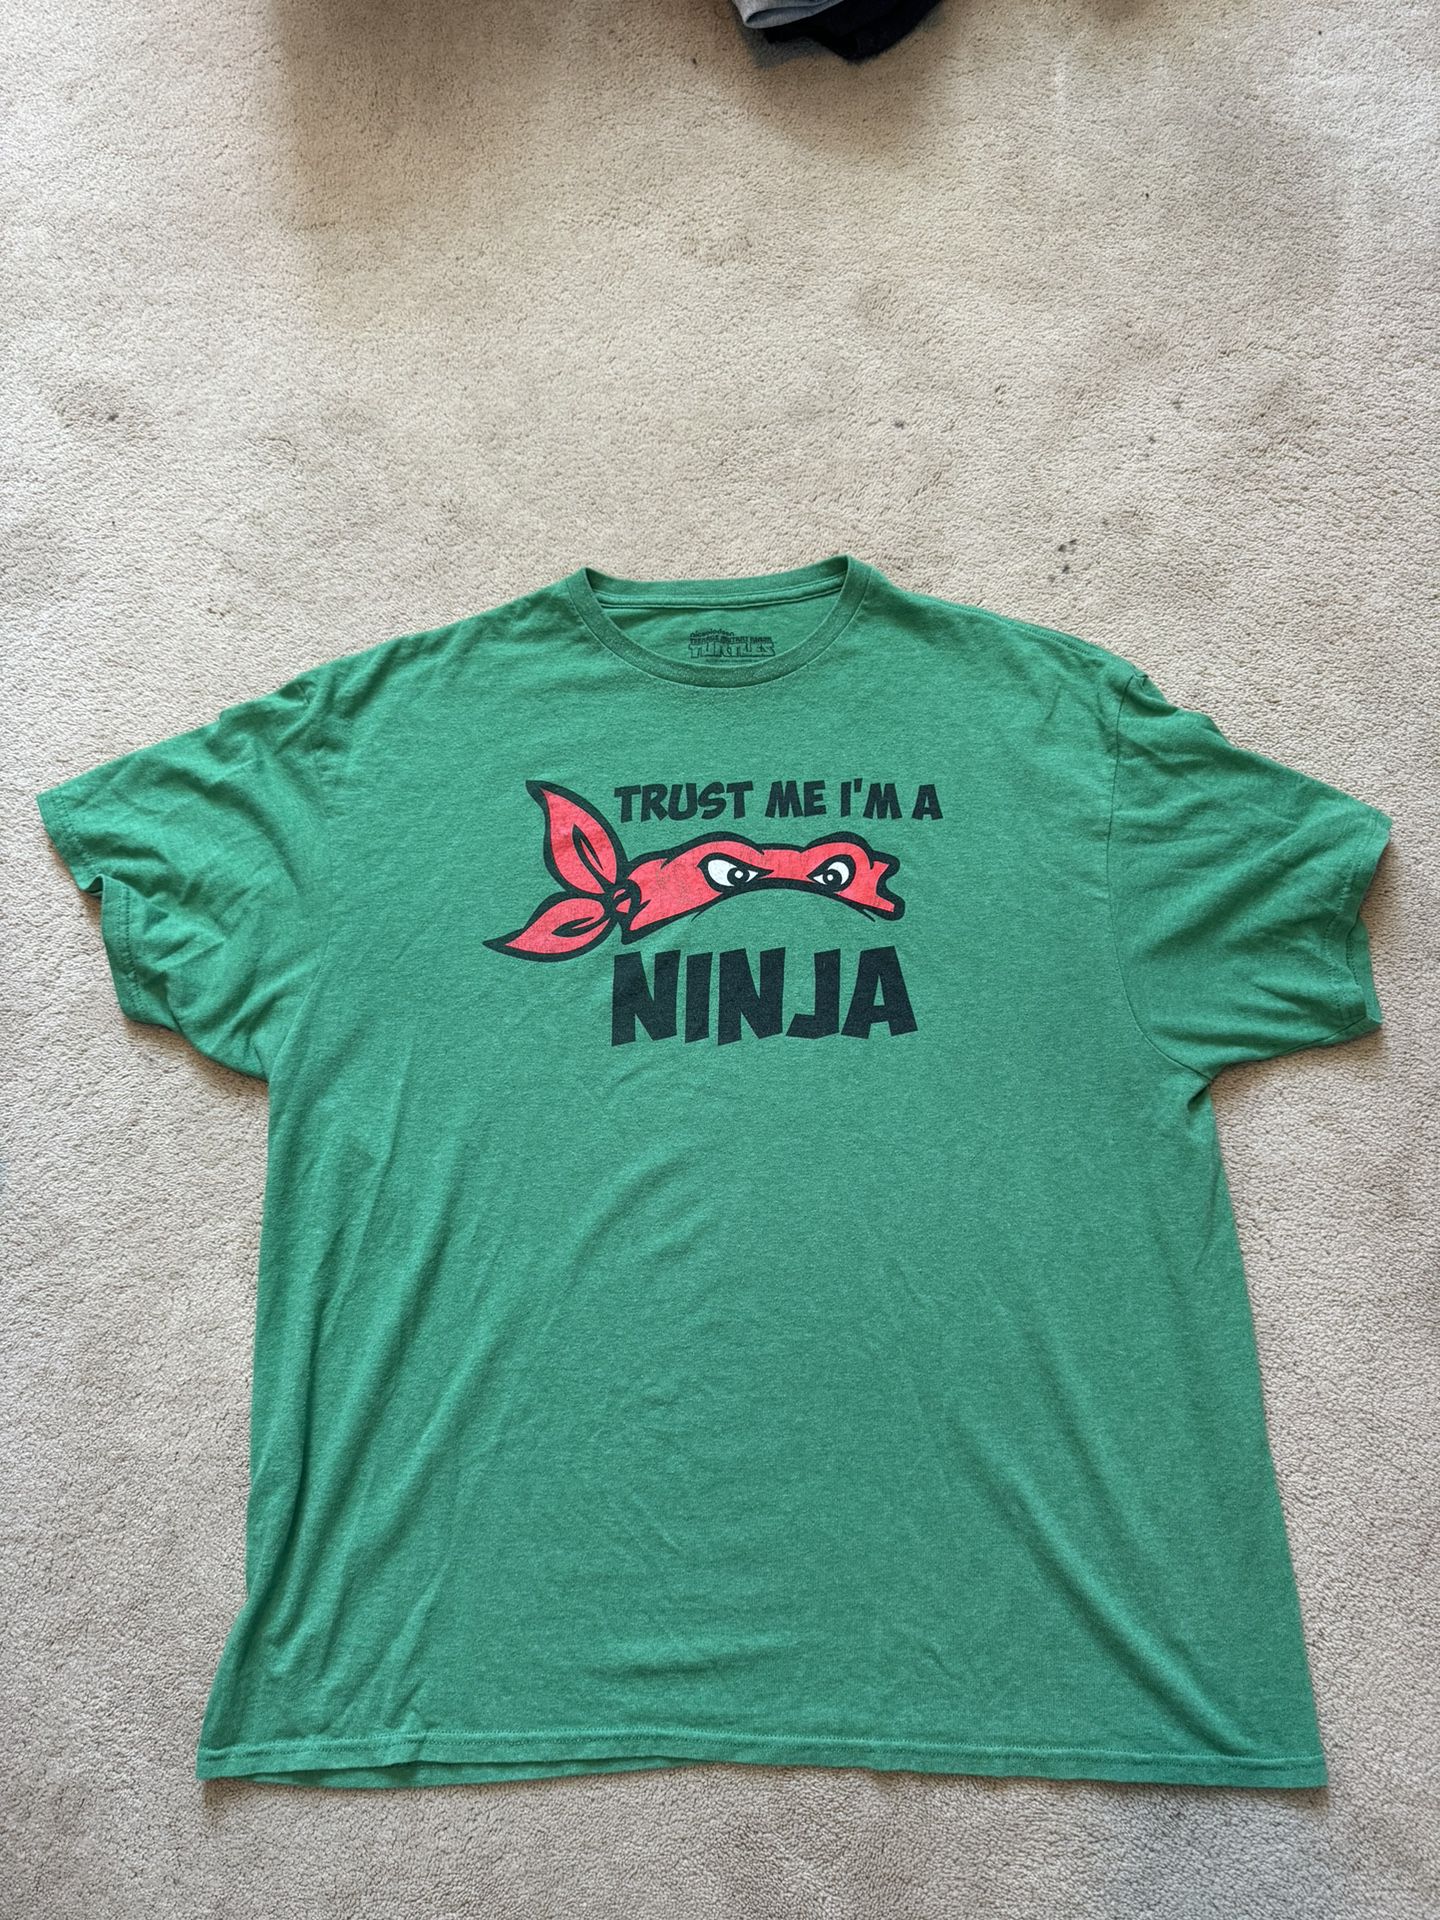 Ninja Turtles Shirt